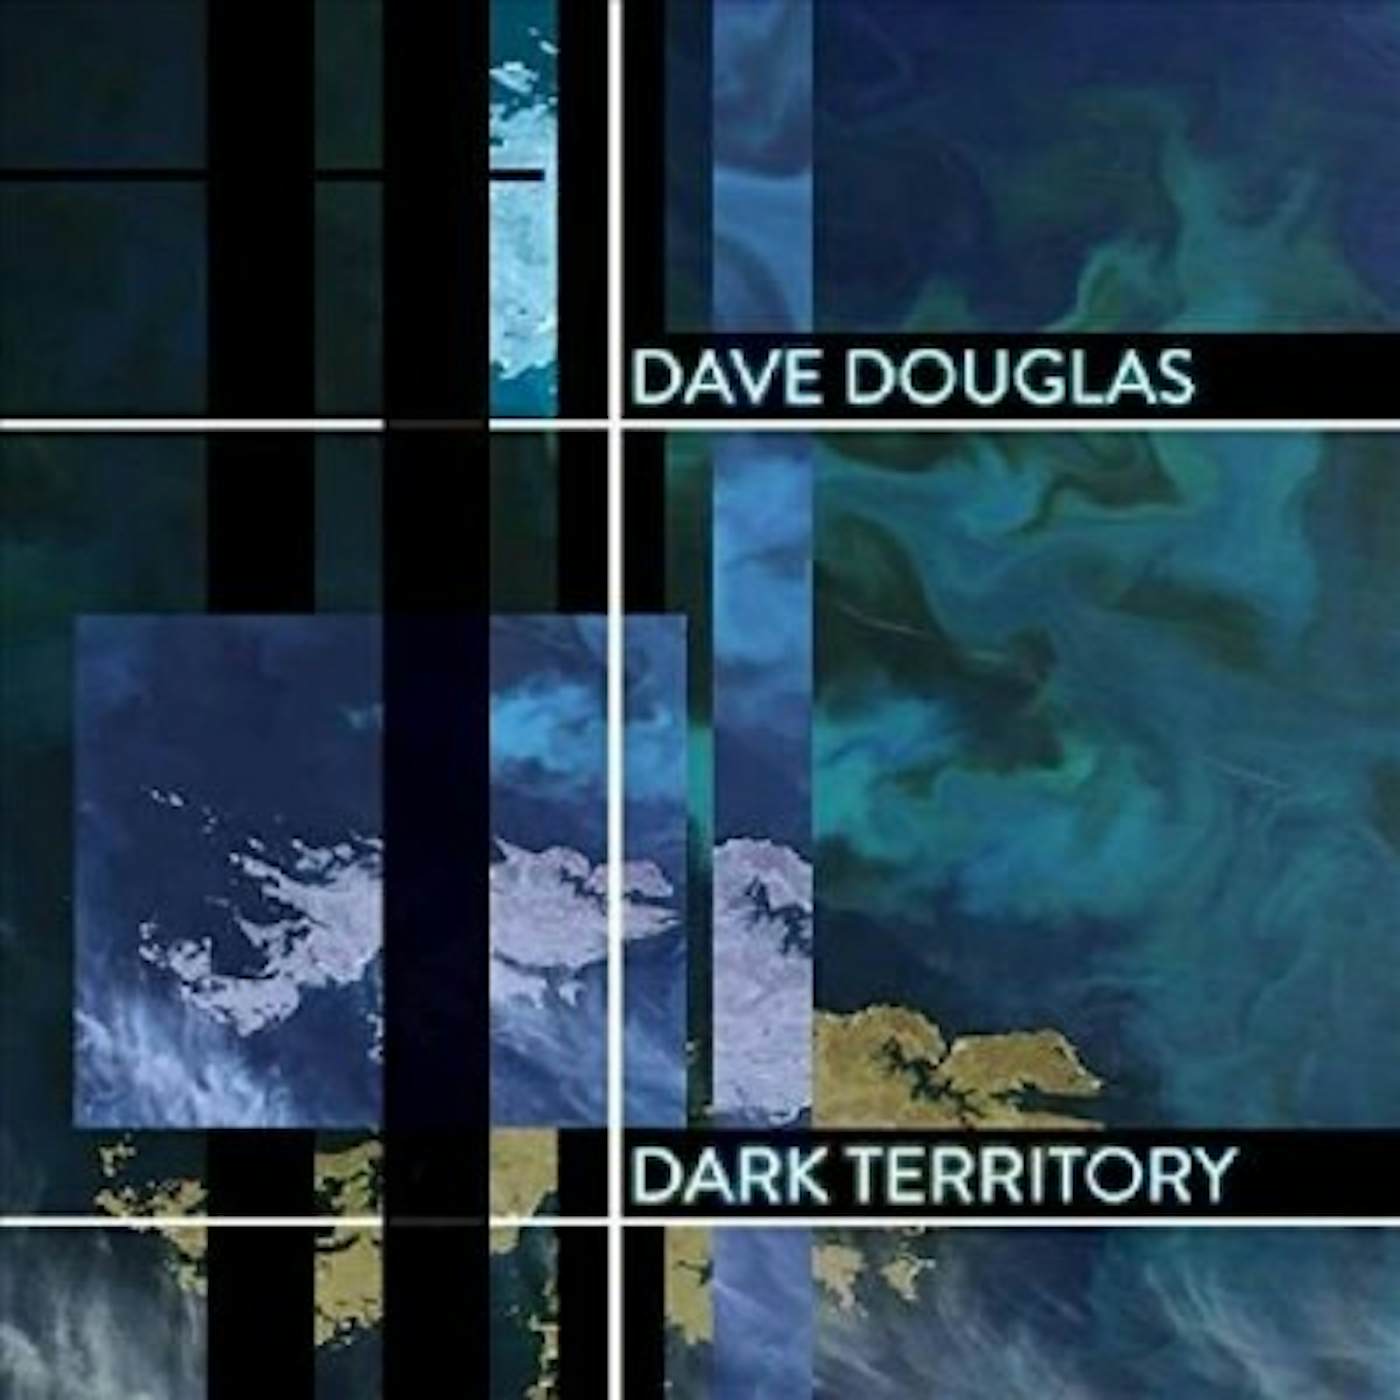 Dave Douglas DARK TERRITORY: HIGH RISK 2 Vinyl Record